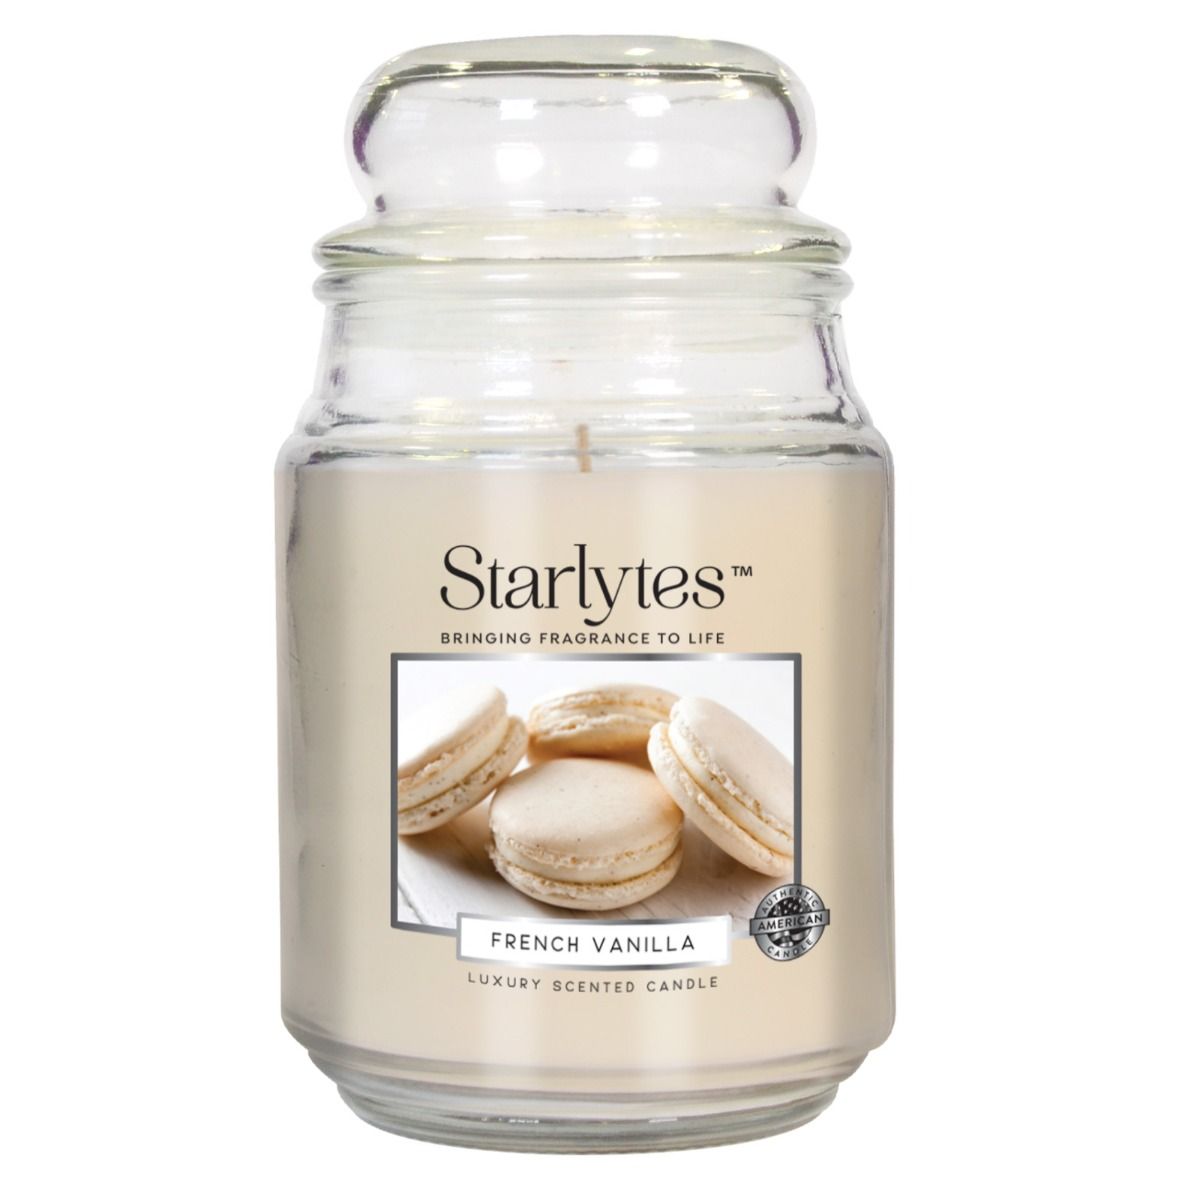 Starlytes 18oz Jar Candle - French Vanilla